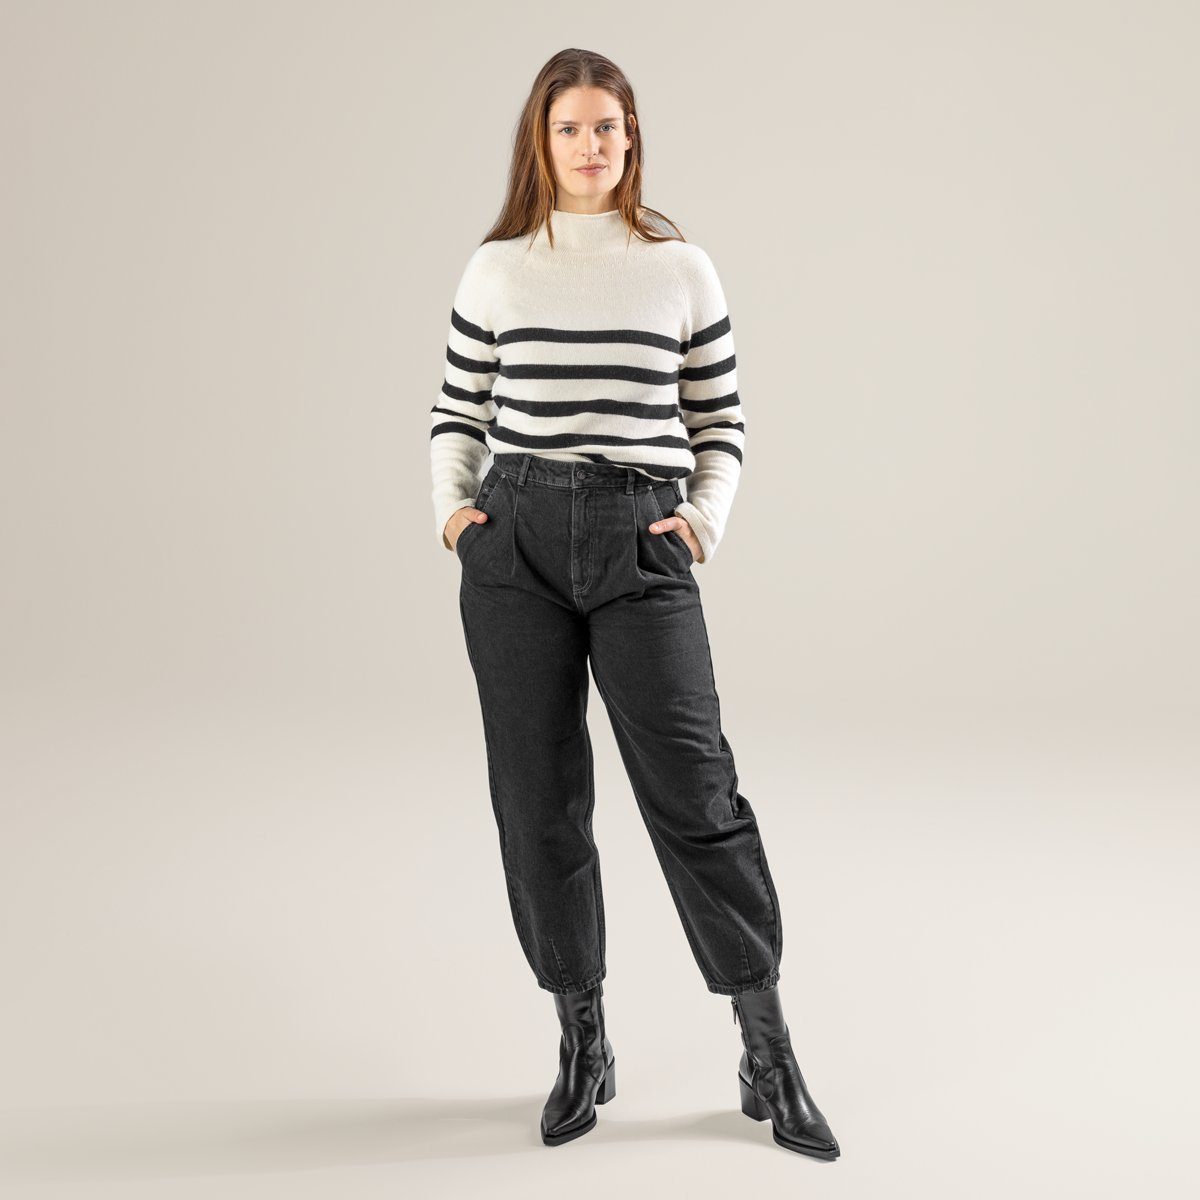 CRAFTS Passform angenehme, 5-Pocket-Hose Jeans-Stoff, PAULETTA großzügige LIVING Hochwertiger Black